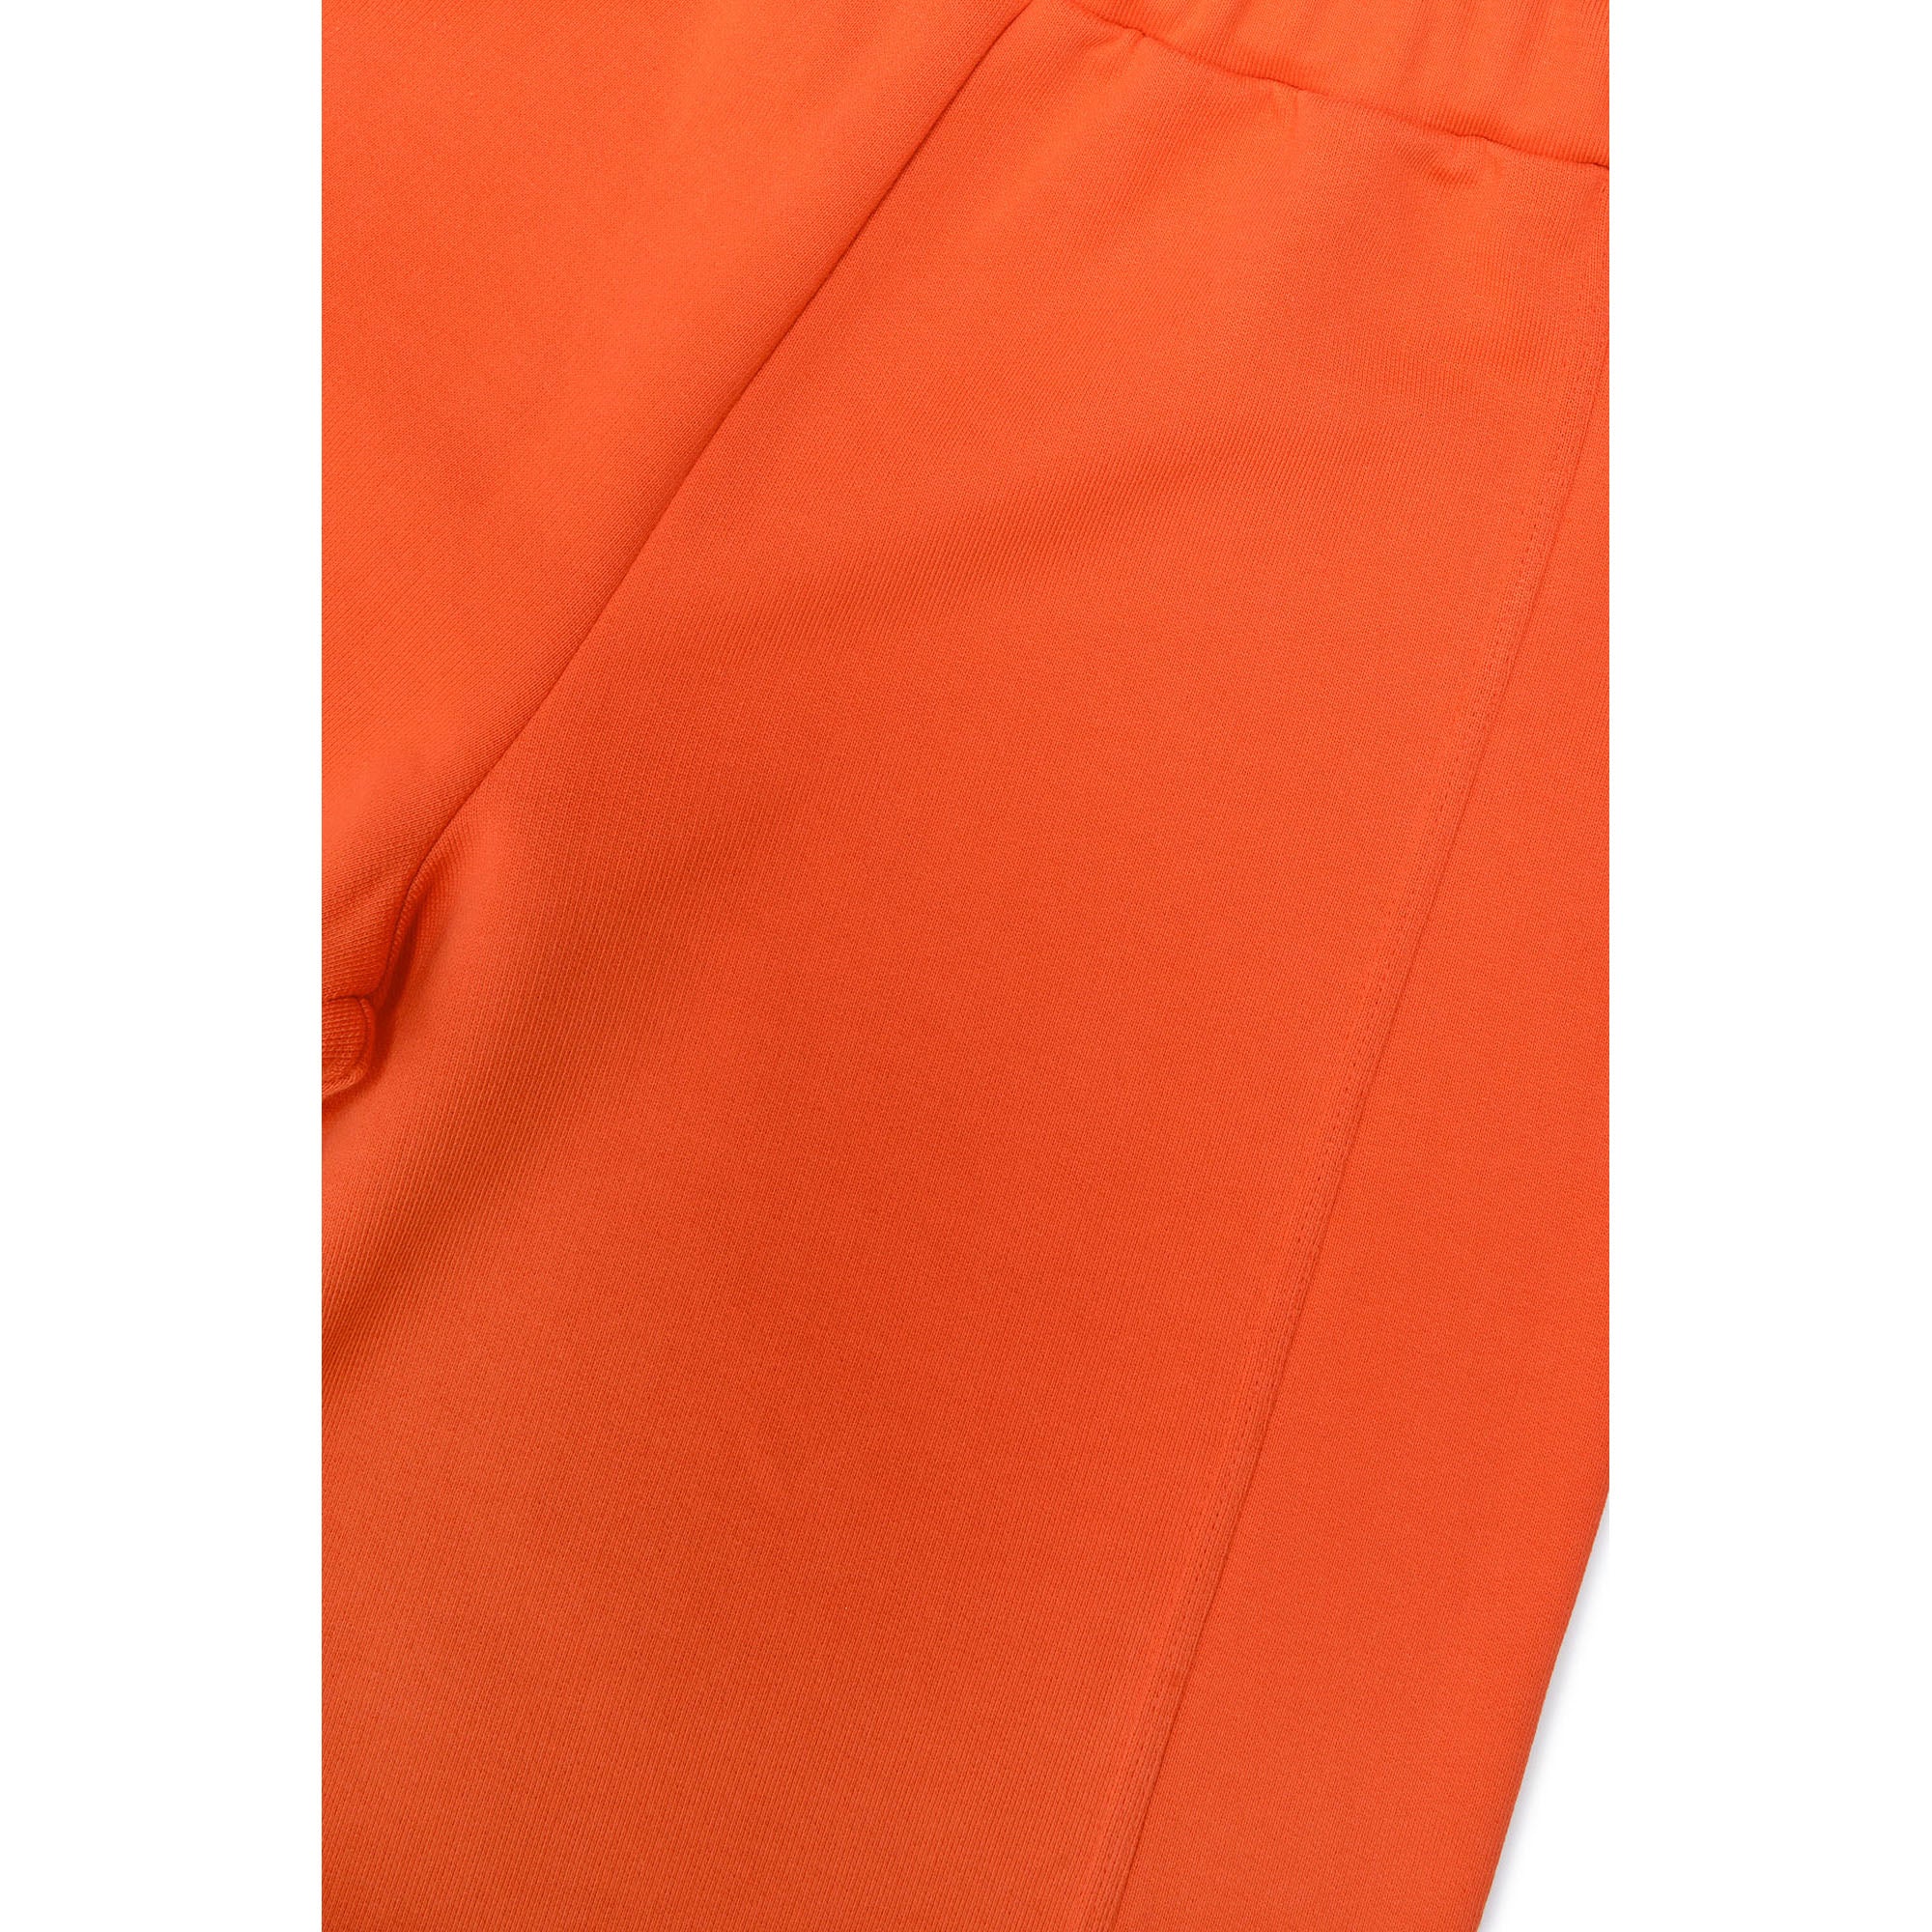 Boys & Girls Orange Logo Cotton Shorts